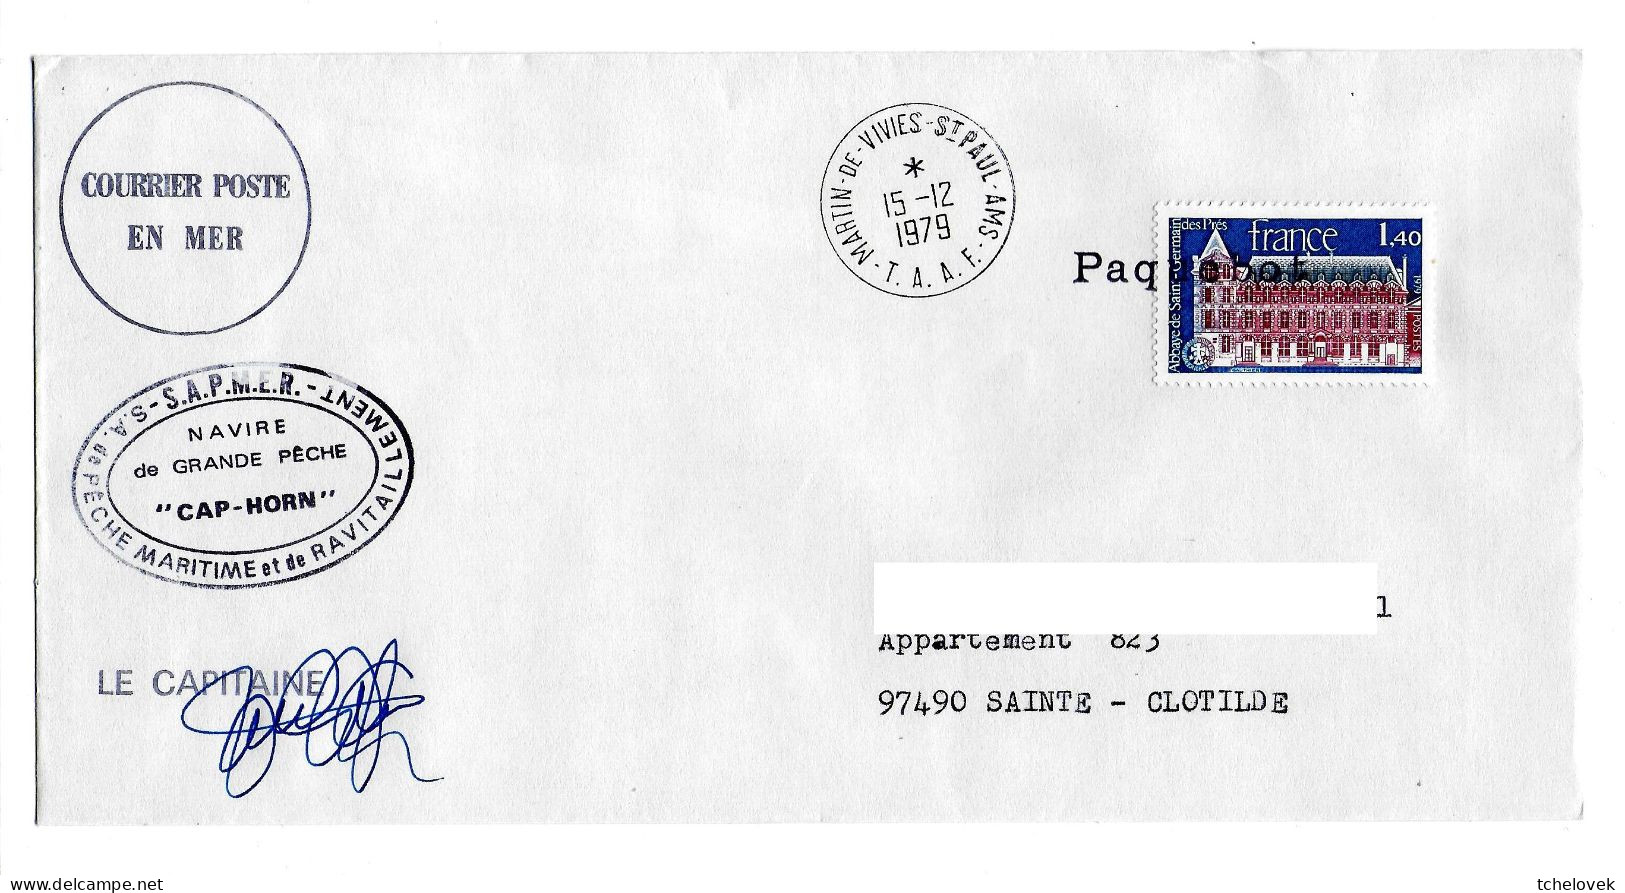 FSAT TAAF Cap Horn Sapmer 15.12.1979 SPA T. France 1.40 St Germain Des Pres (2) - Storia Postale